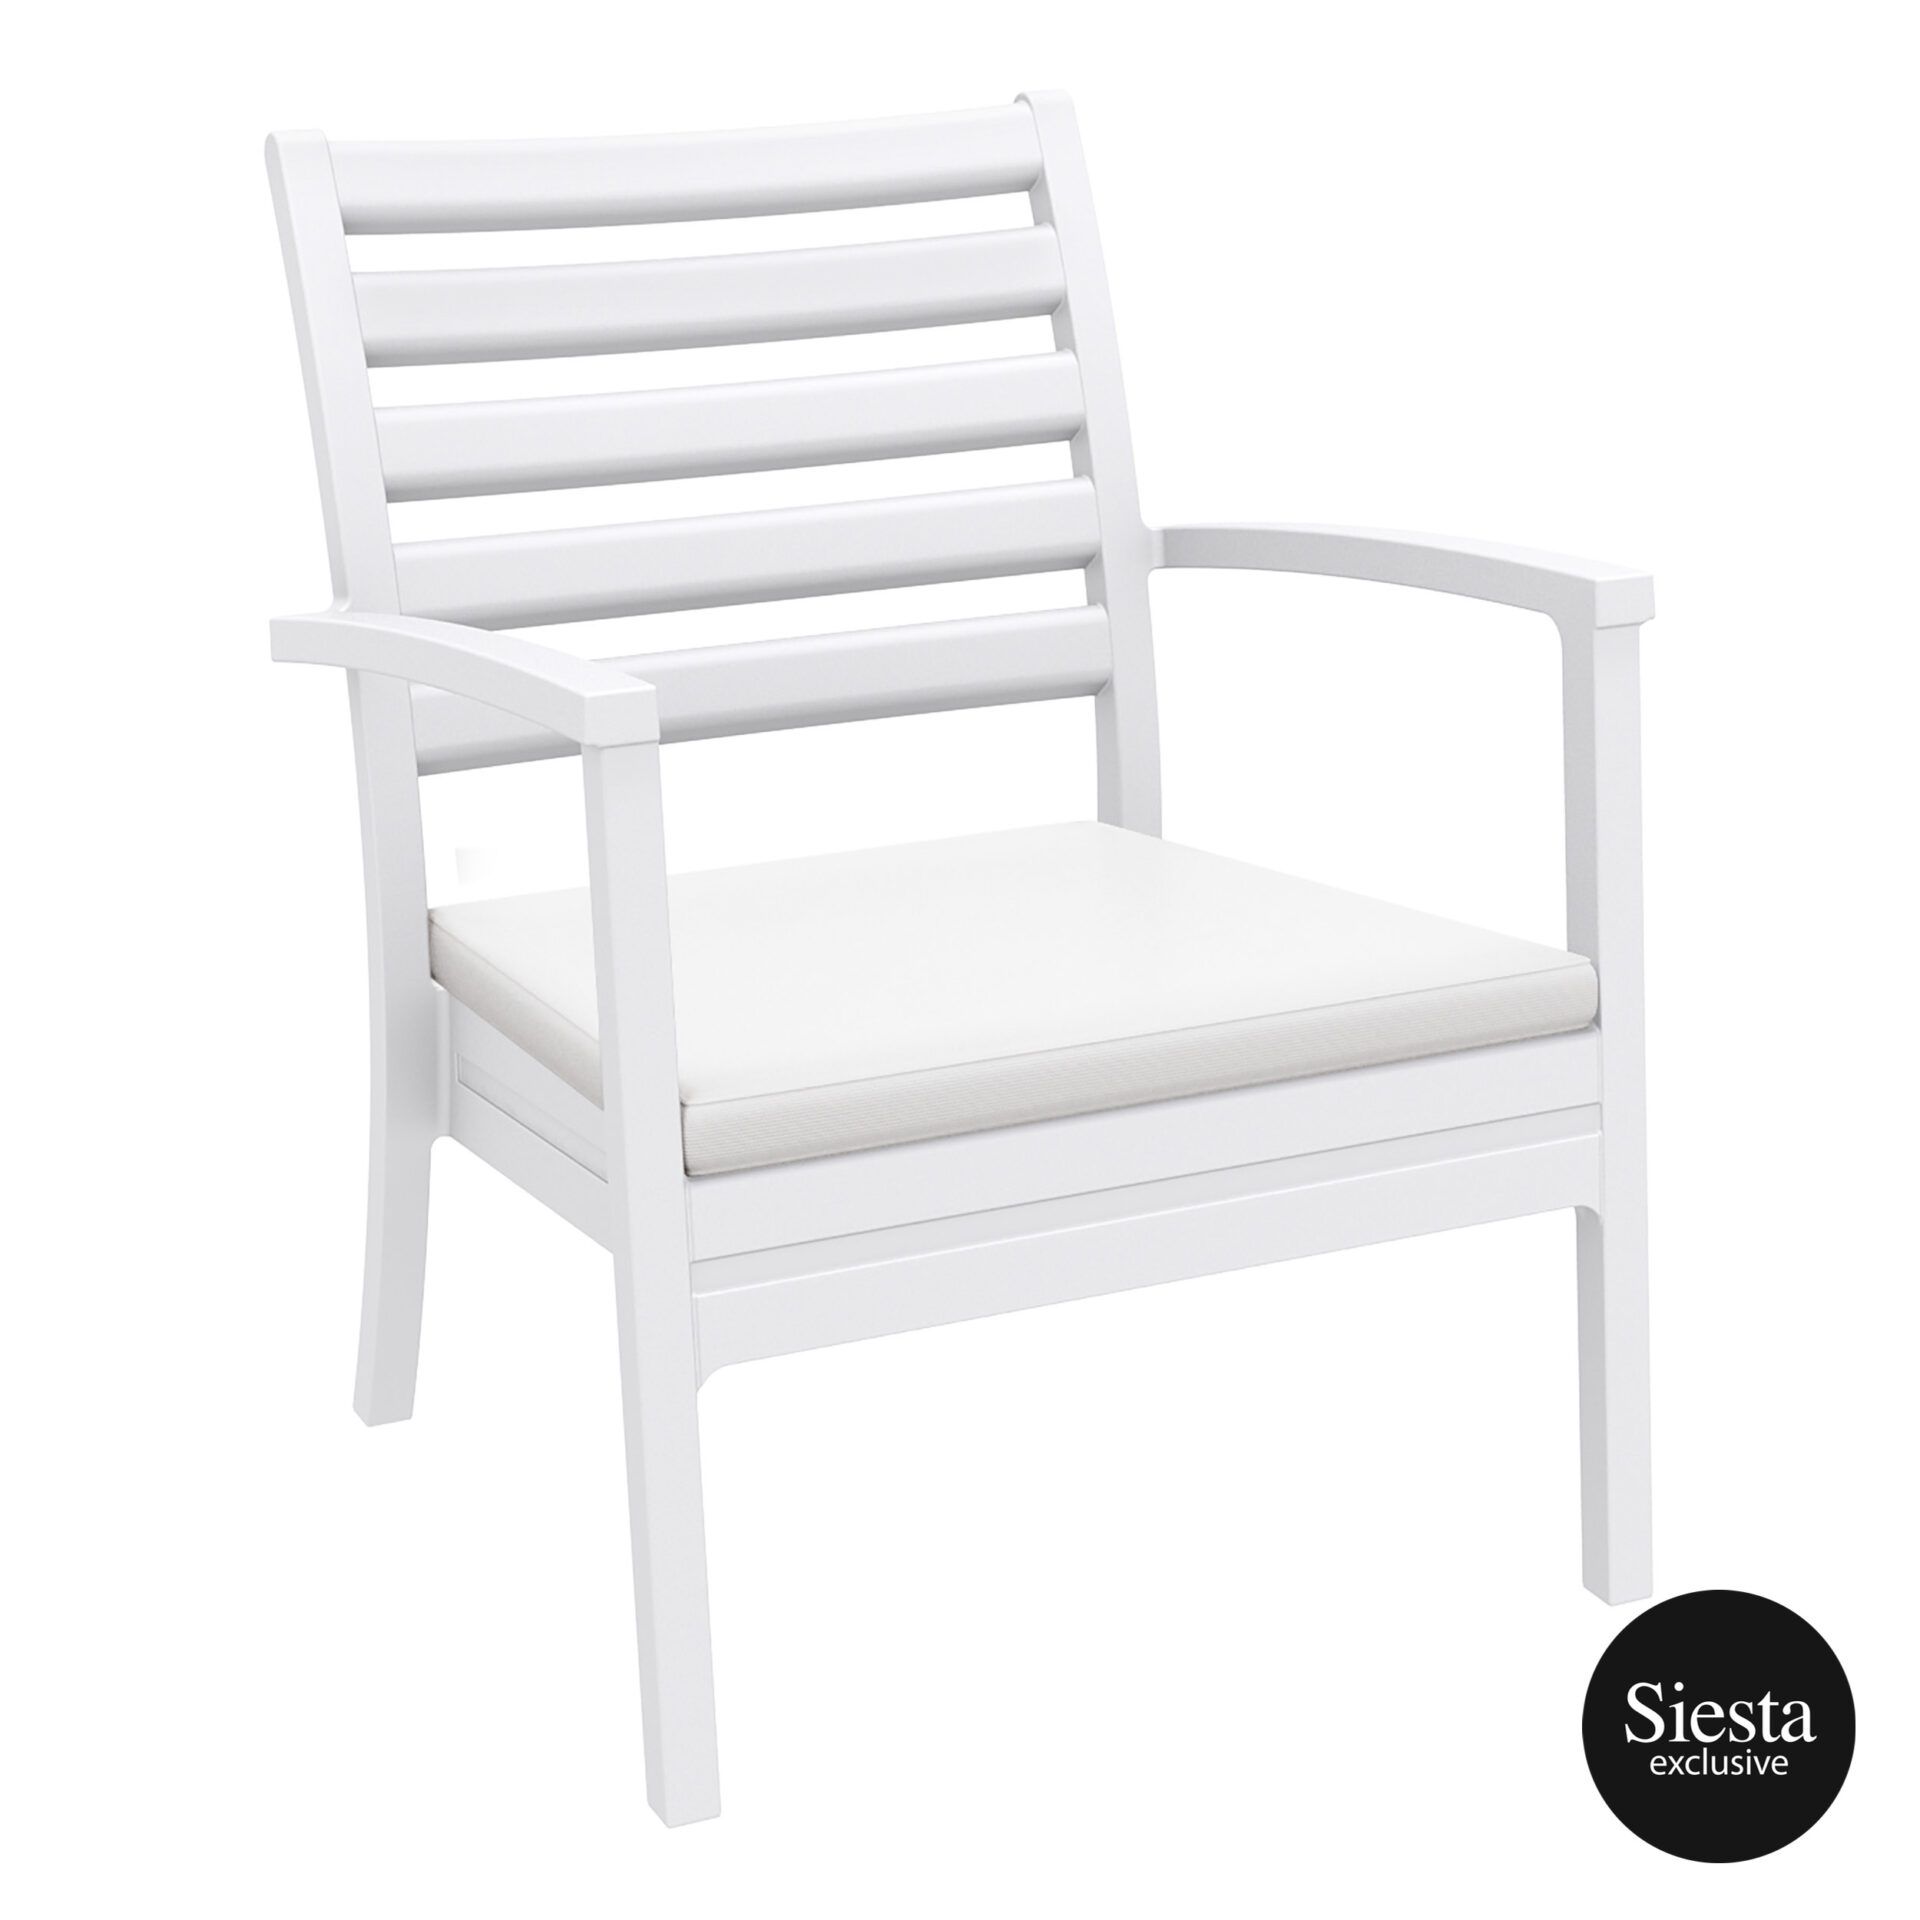 Artemis XL Armchair - White with White Seat Cushion